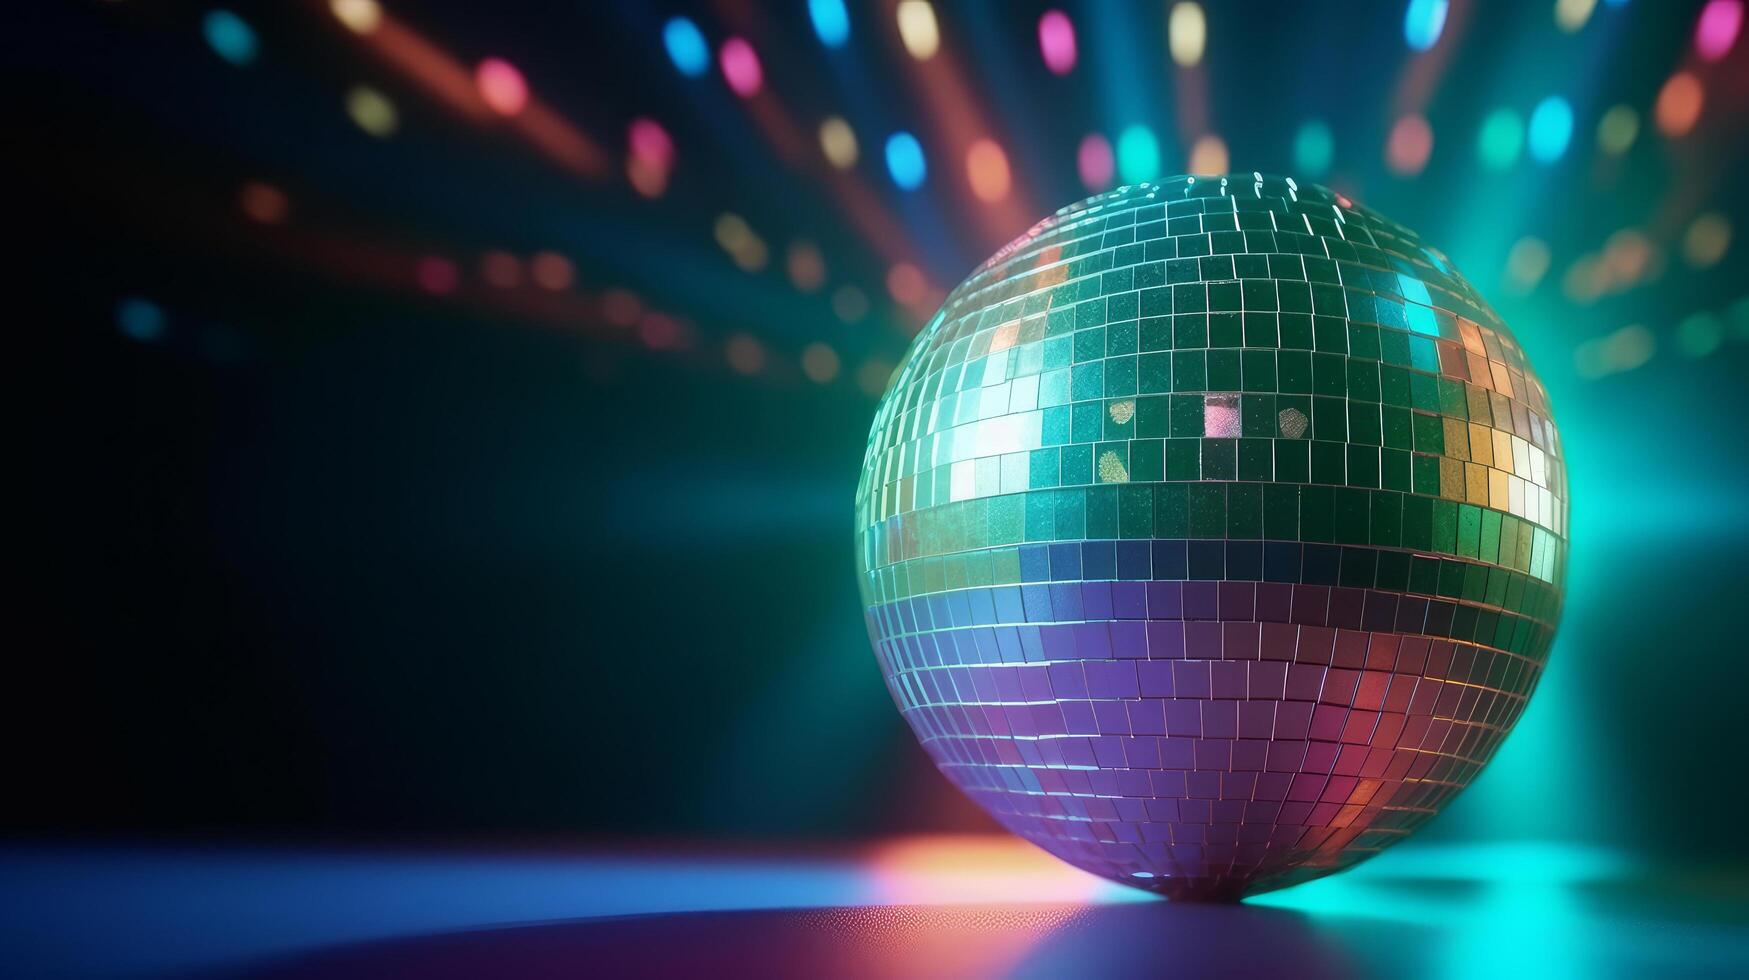 Disco ball background. Illustration photo